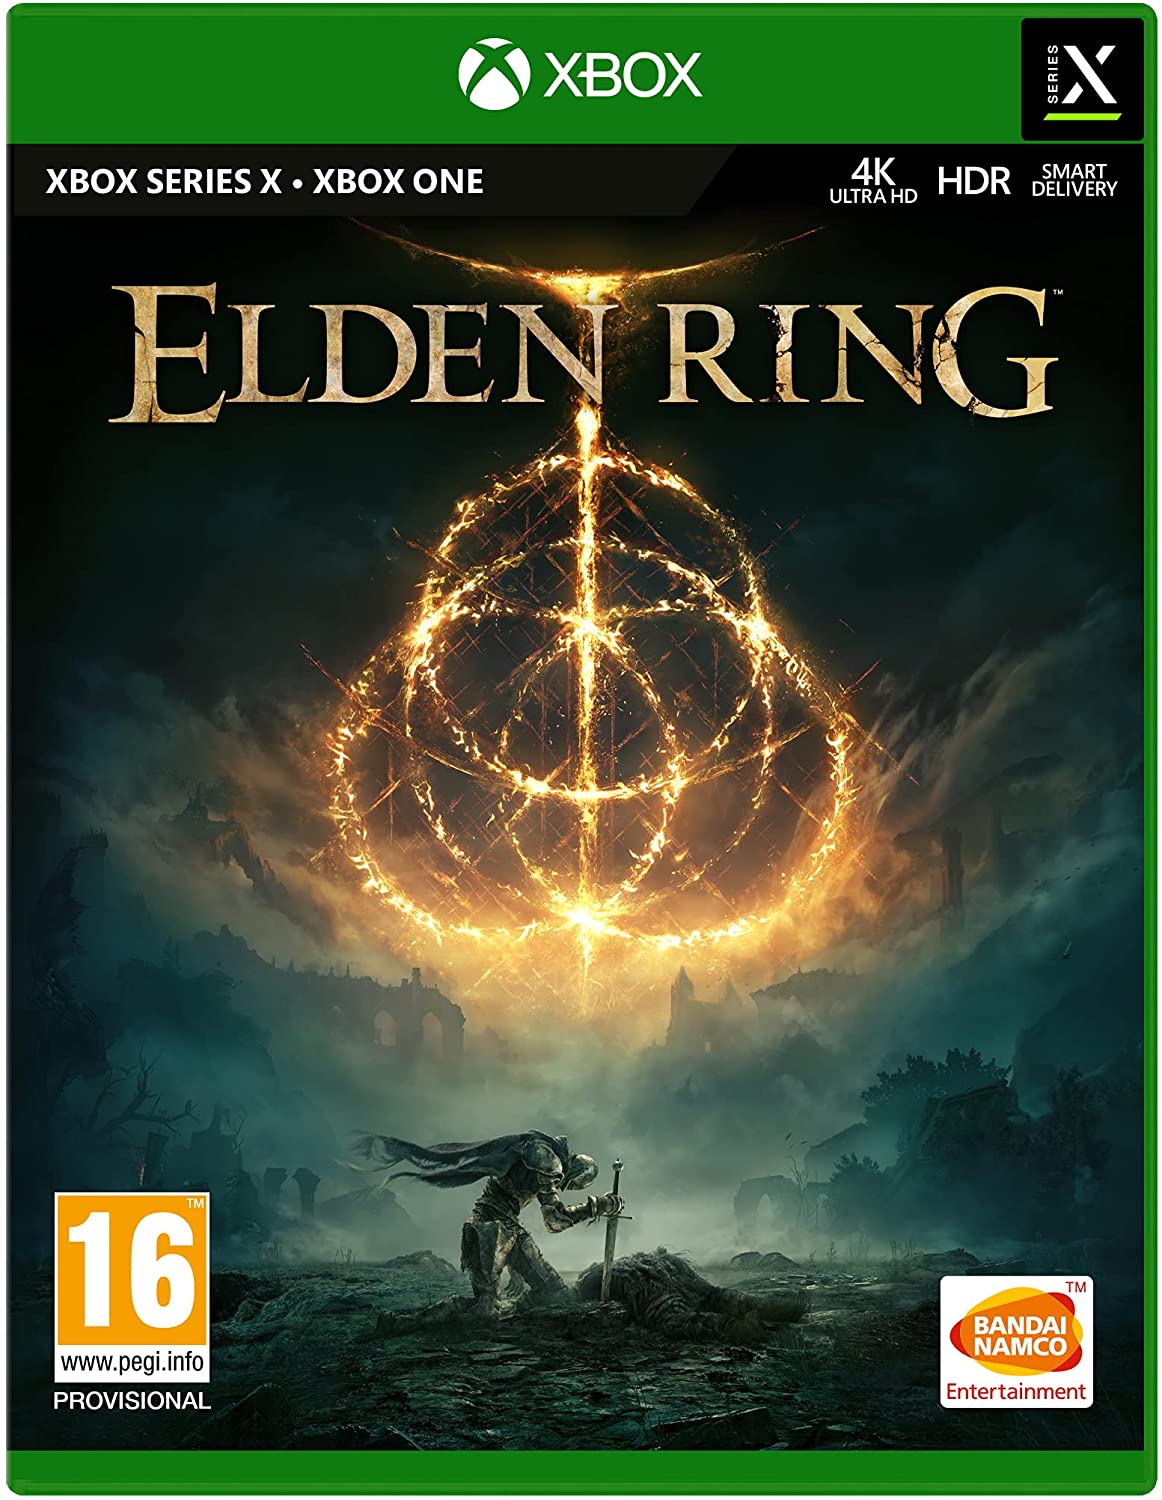 Elden Ring Digital Download Key (Xbox One/Series X)